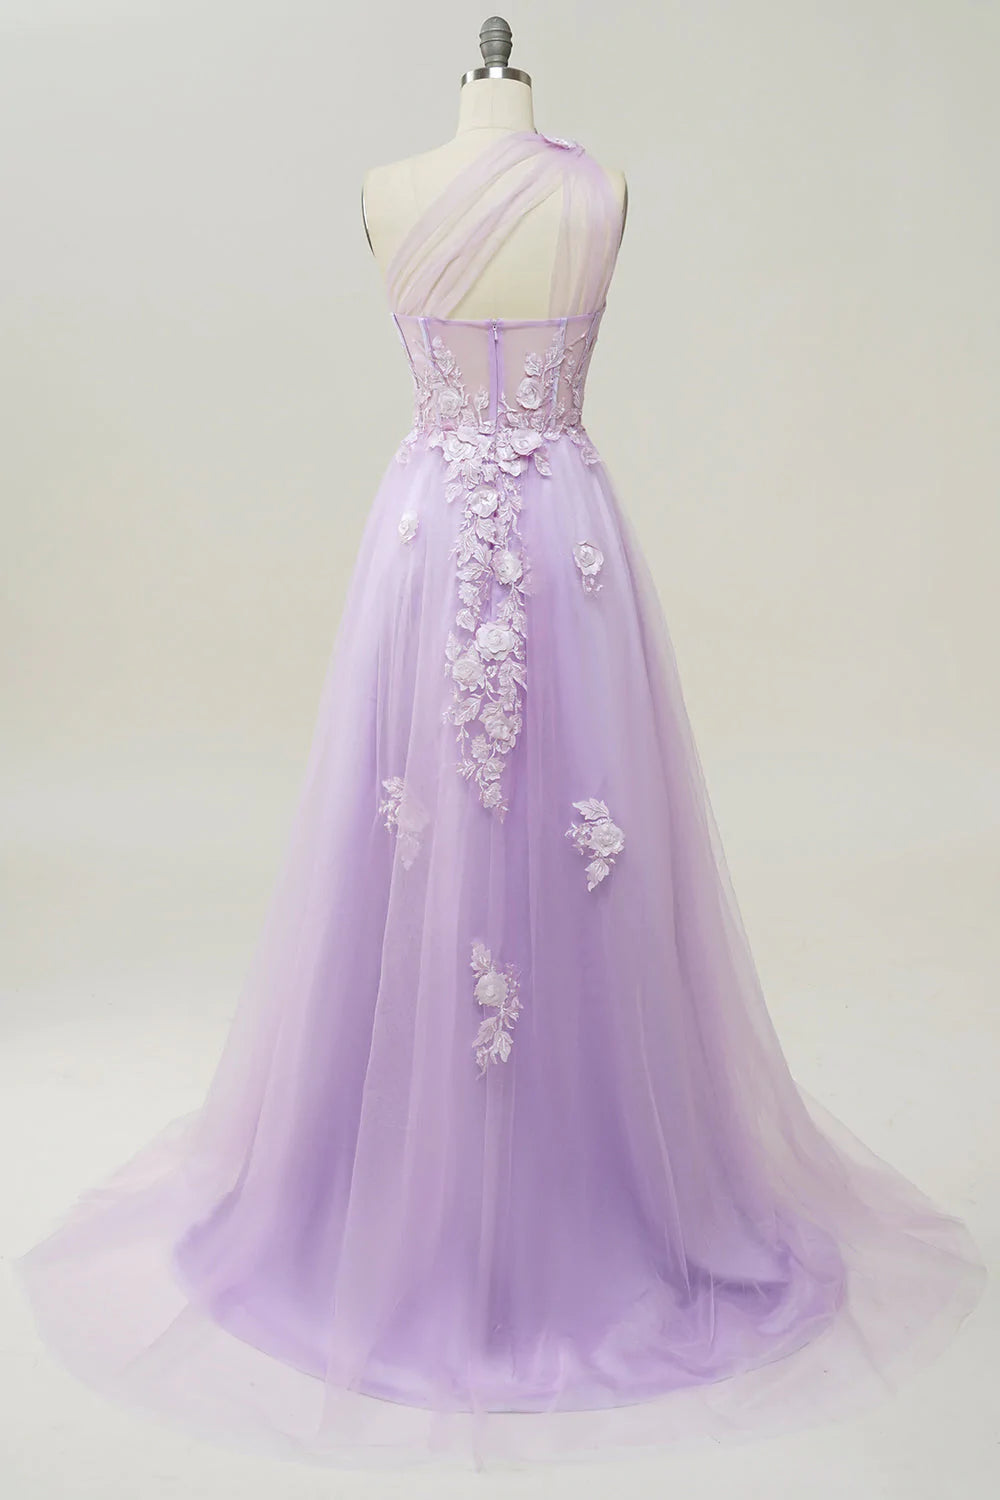 Elegant A Line One Shoulder Purple Long Prom Dress with Appliques